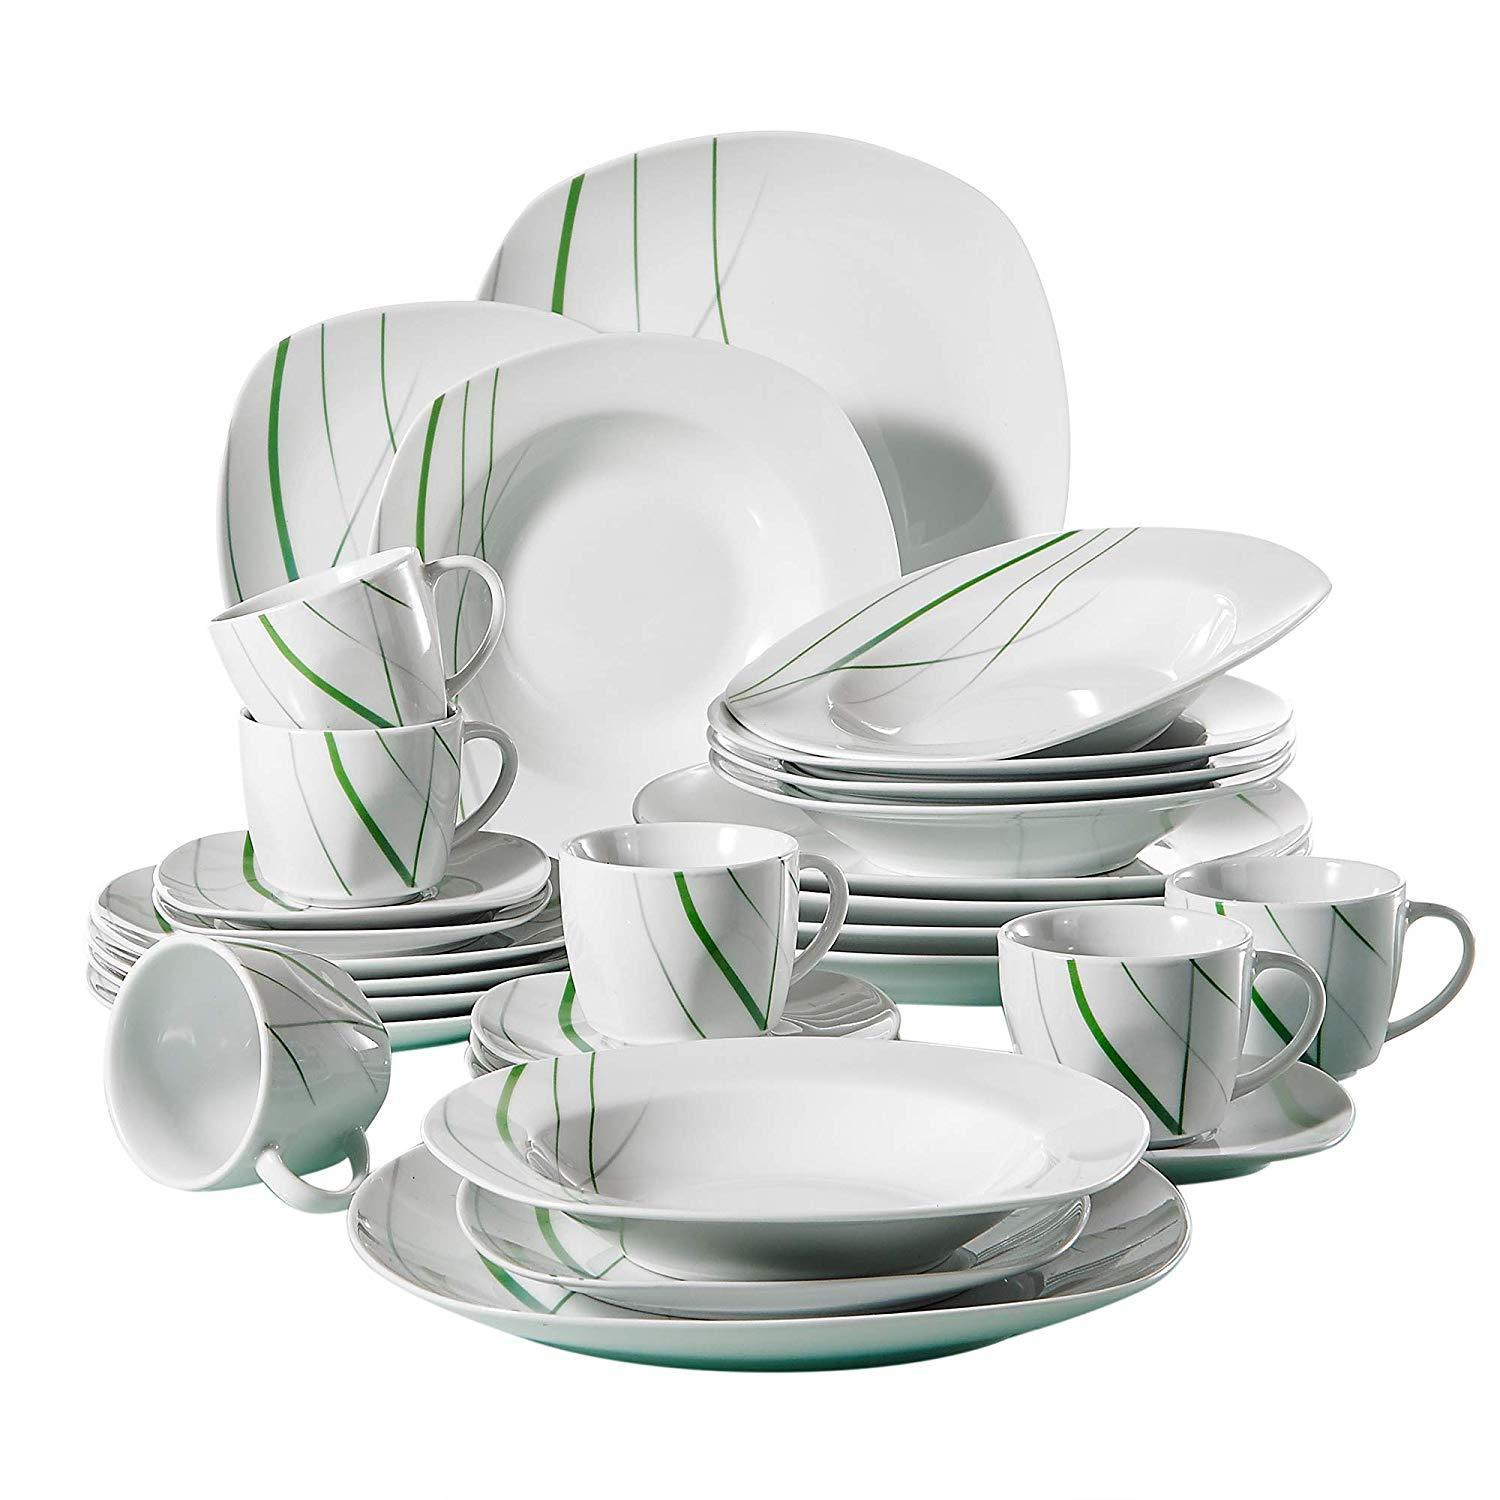 AVIVA 30-Piece Kitchen Green Line Porcelain China Ceramic Plate Set with Dessert Plate,Soup Plate,Dinner Plate,Cup&Saucer - Nordic Side - 30, AVIVA, Ceramic, China, Dessert, Green, Kitchen, L